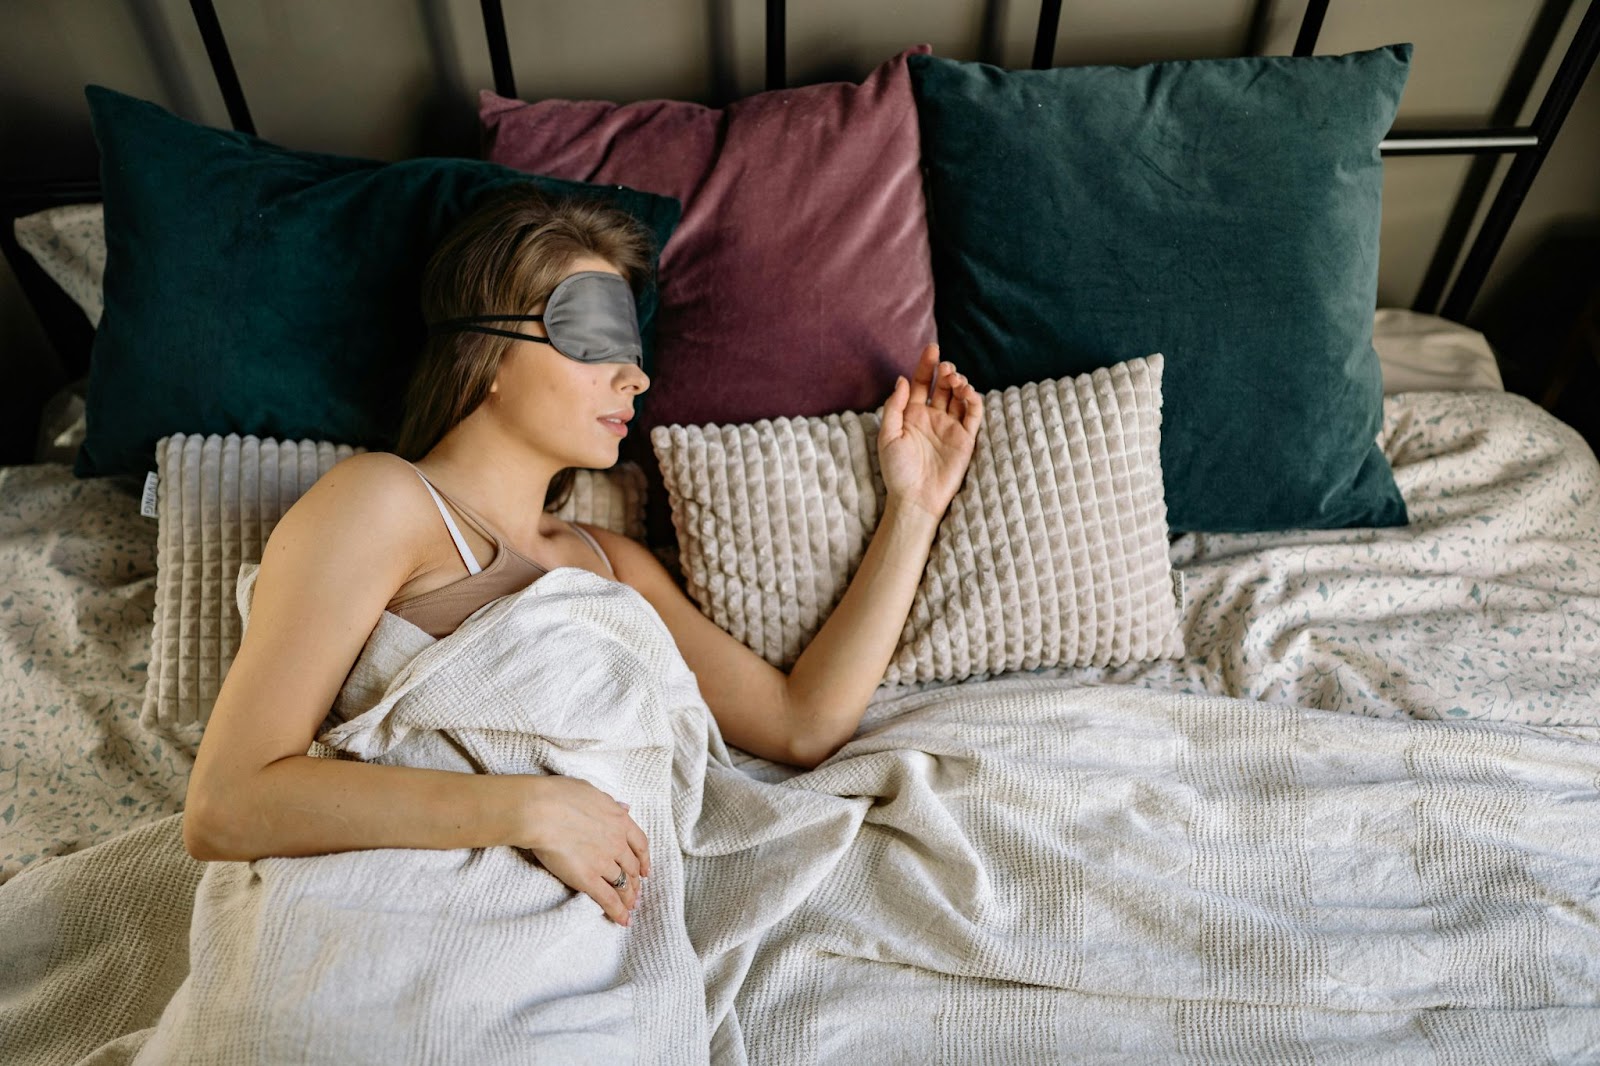 How To Buy a Prescription Antihistamine for Sleep Online